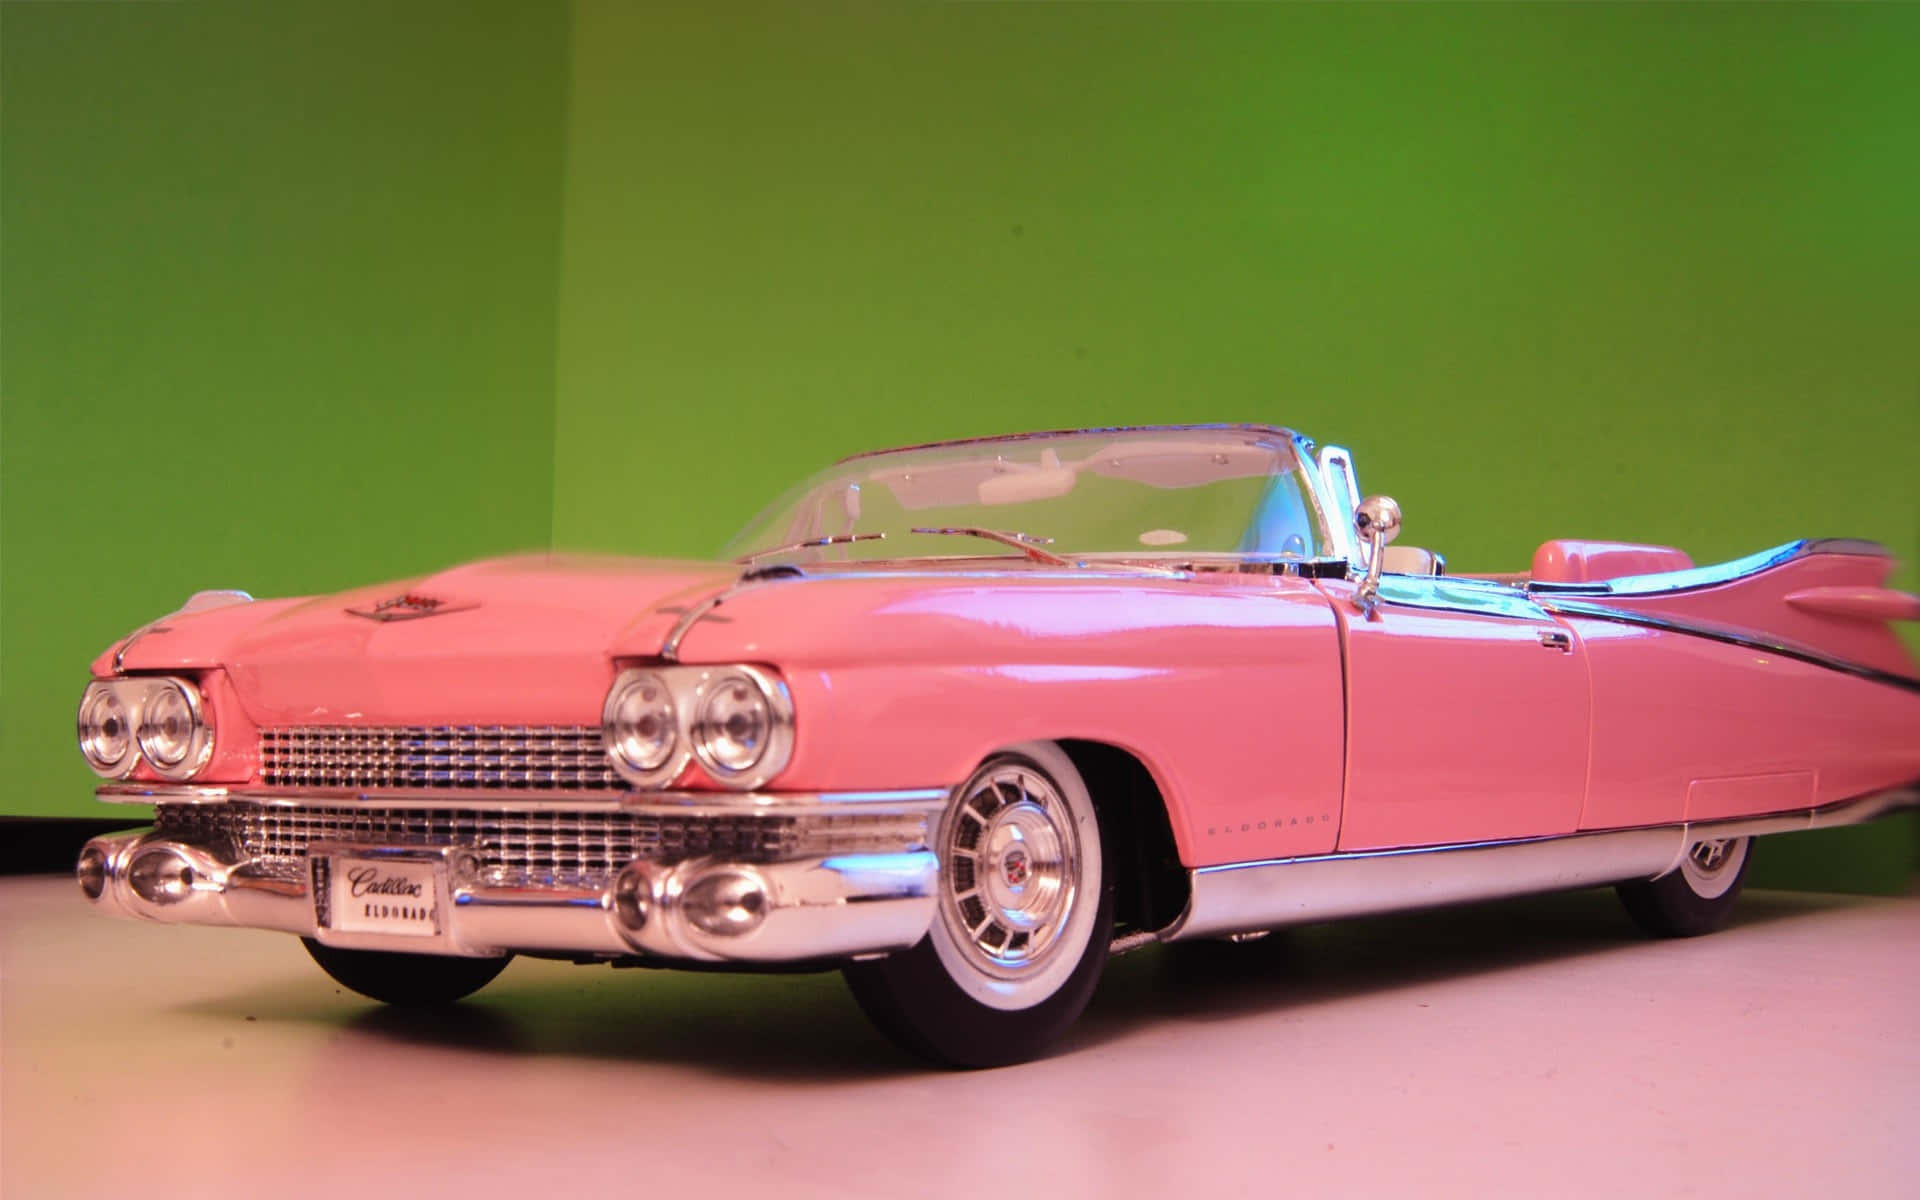 Classic Pink Cadillac Car on a Desert Road Wallpaper